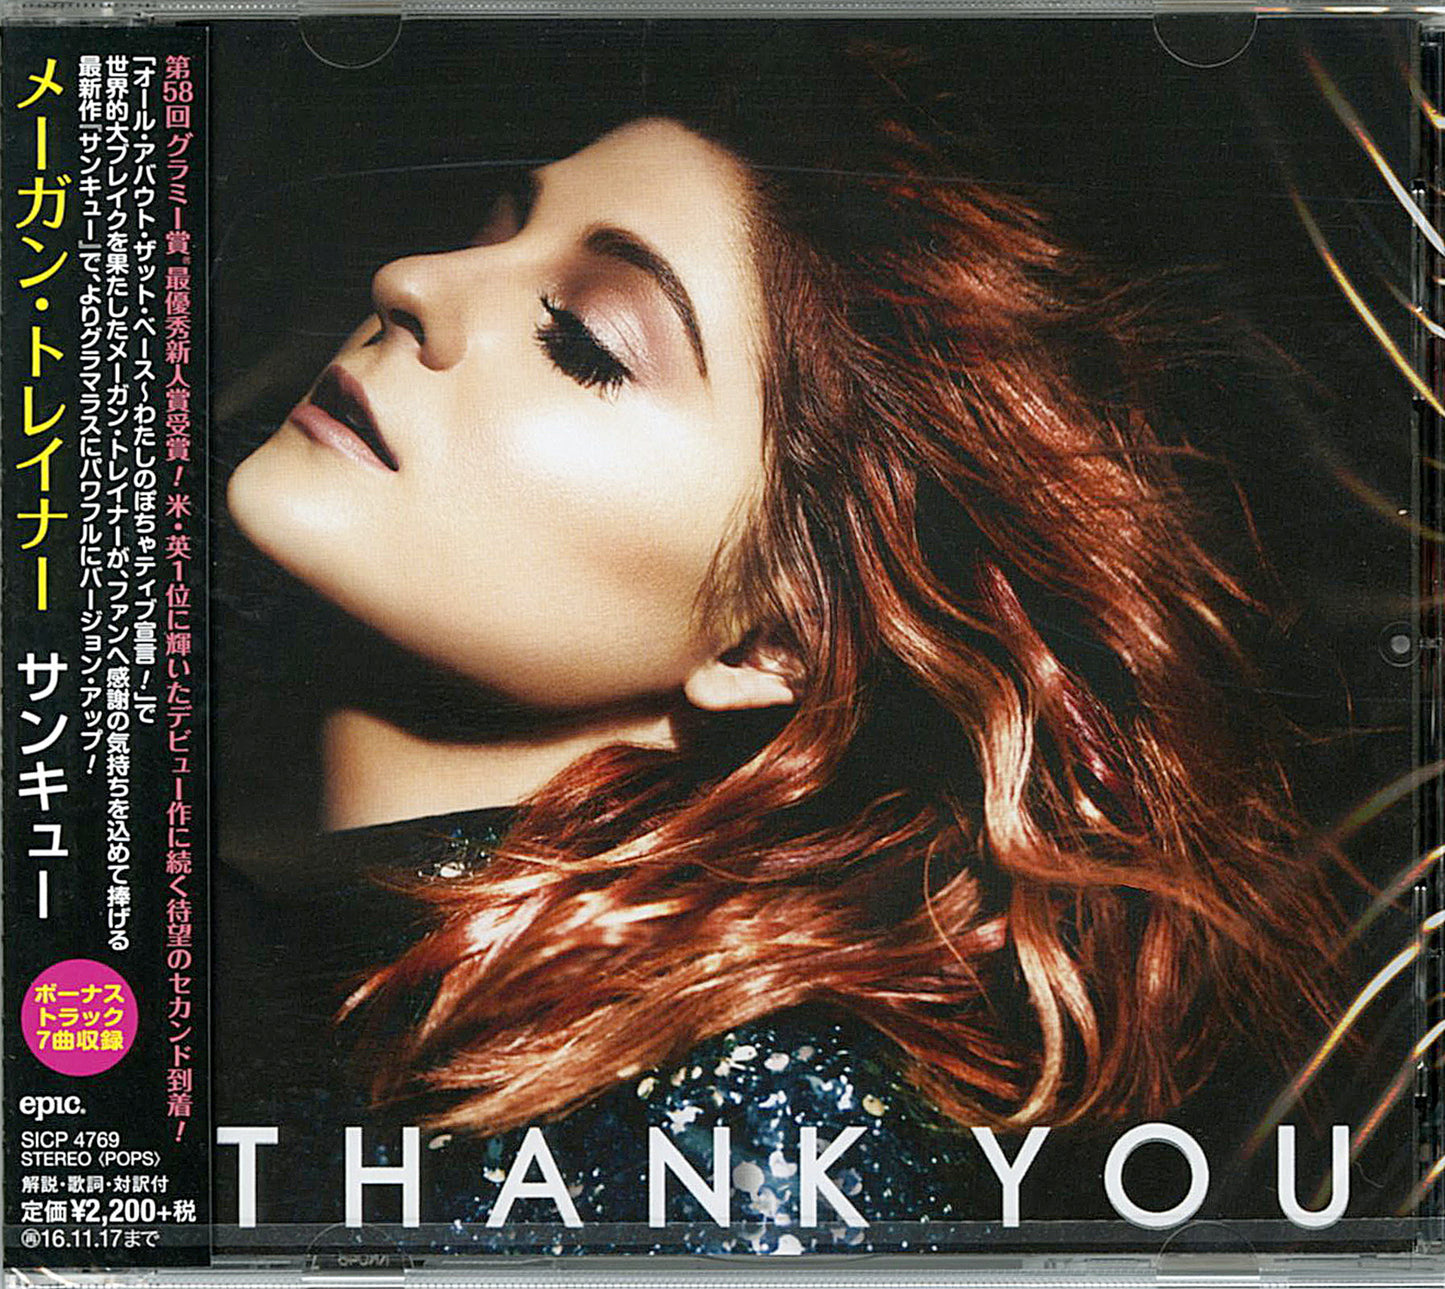 Meghan Trainor - Thank You - Japan  CD Bonus Track